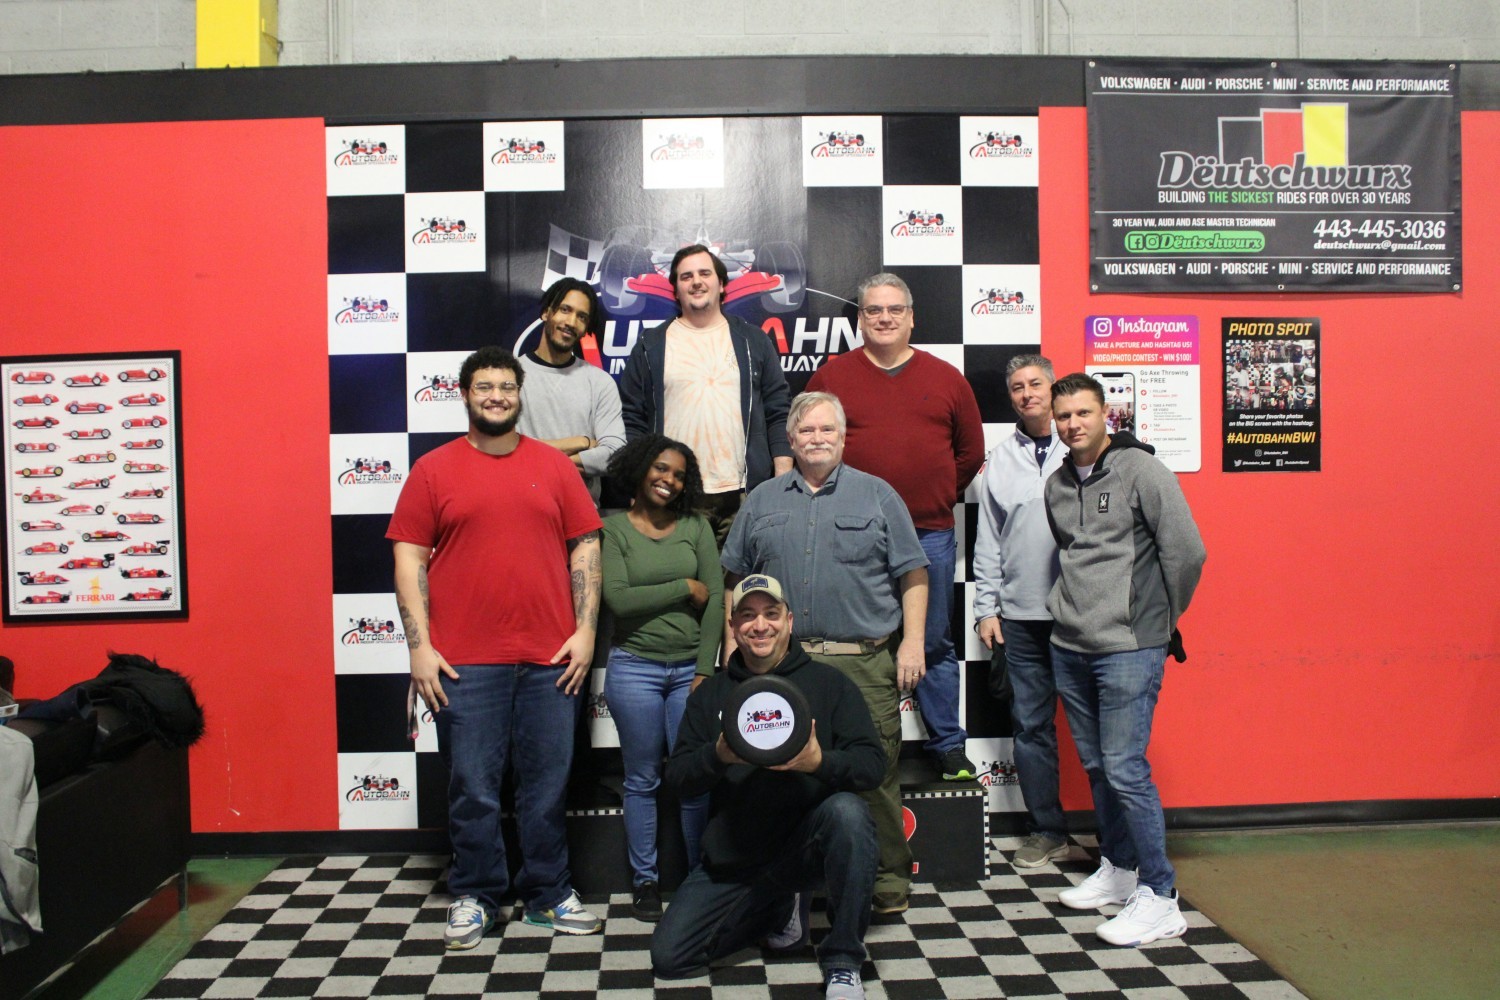 Maryland Team Members bonding over go-kart racing!